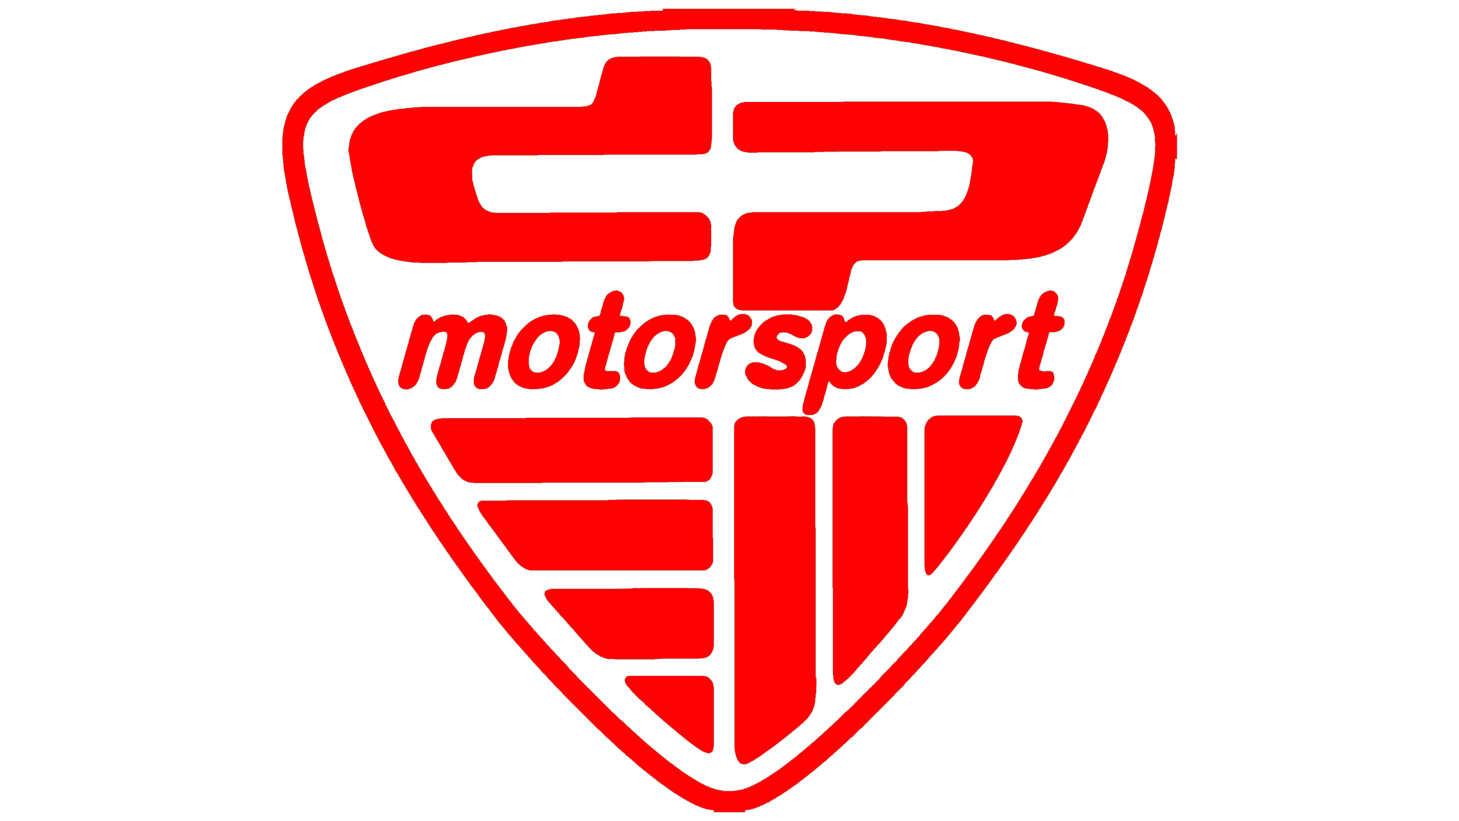 Dp motorsport sign